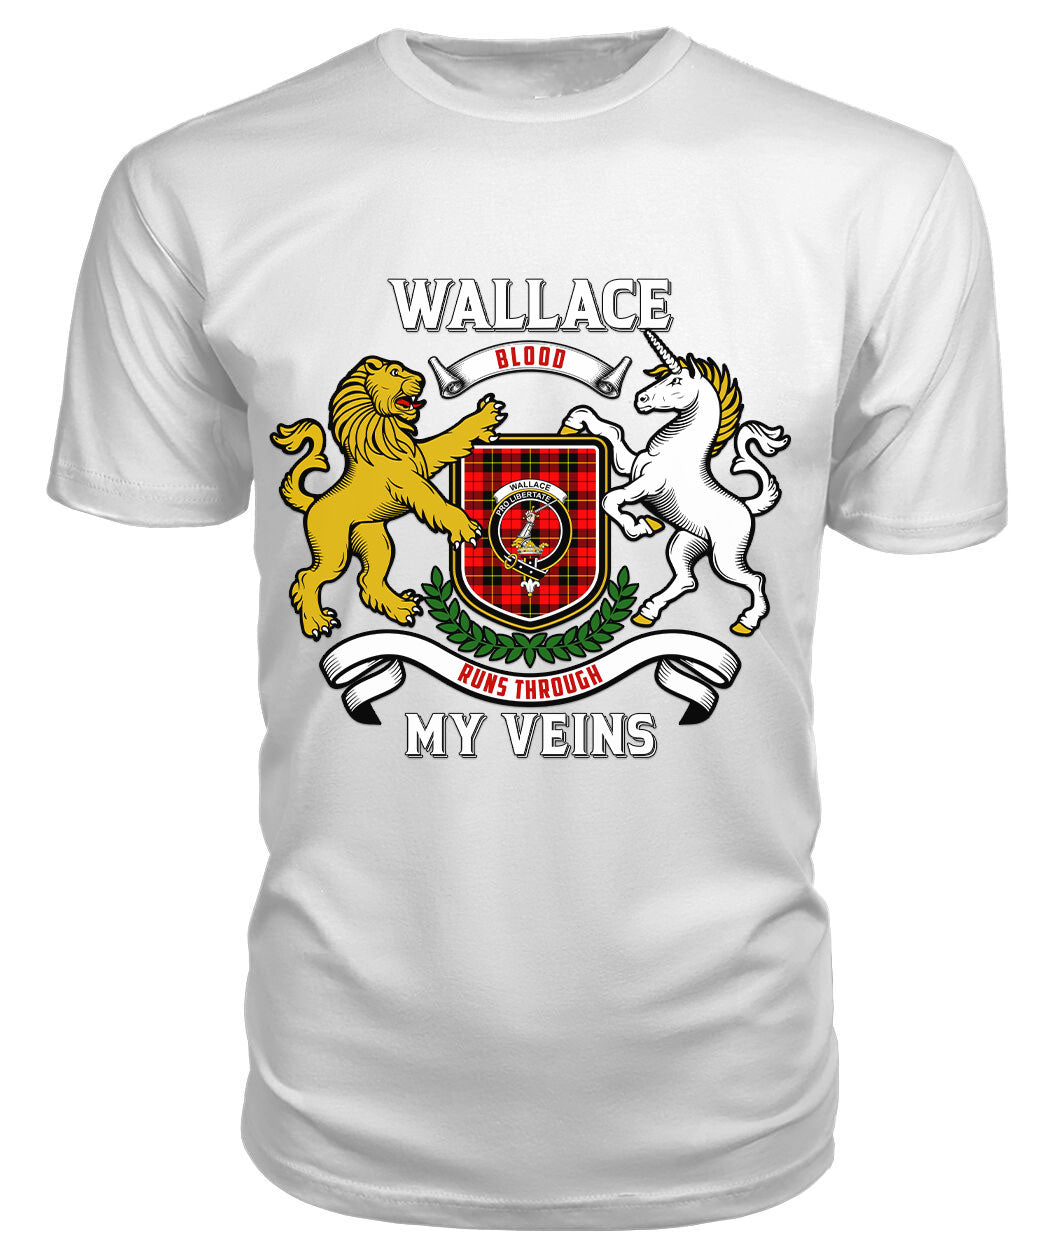 Wallace Hunting Red Tartan Crest 2D T-shirt - Blood Runs Through My Veins Style